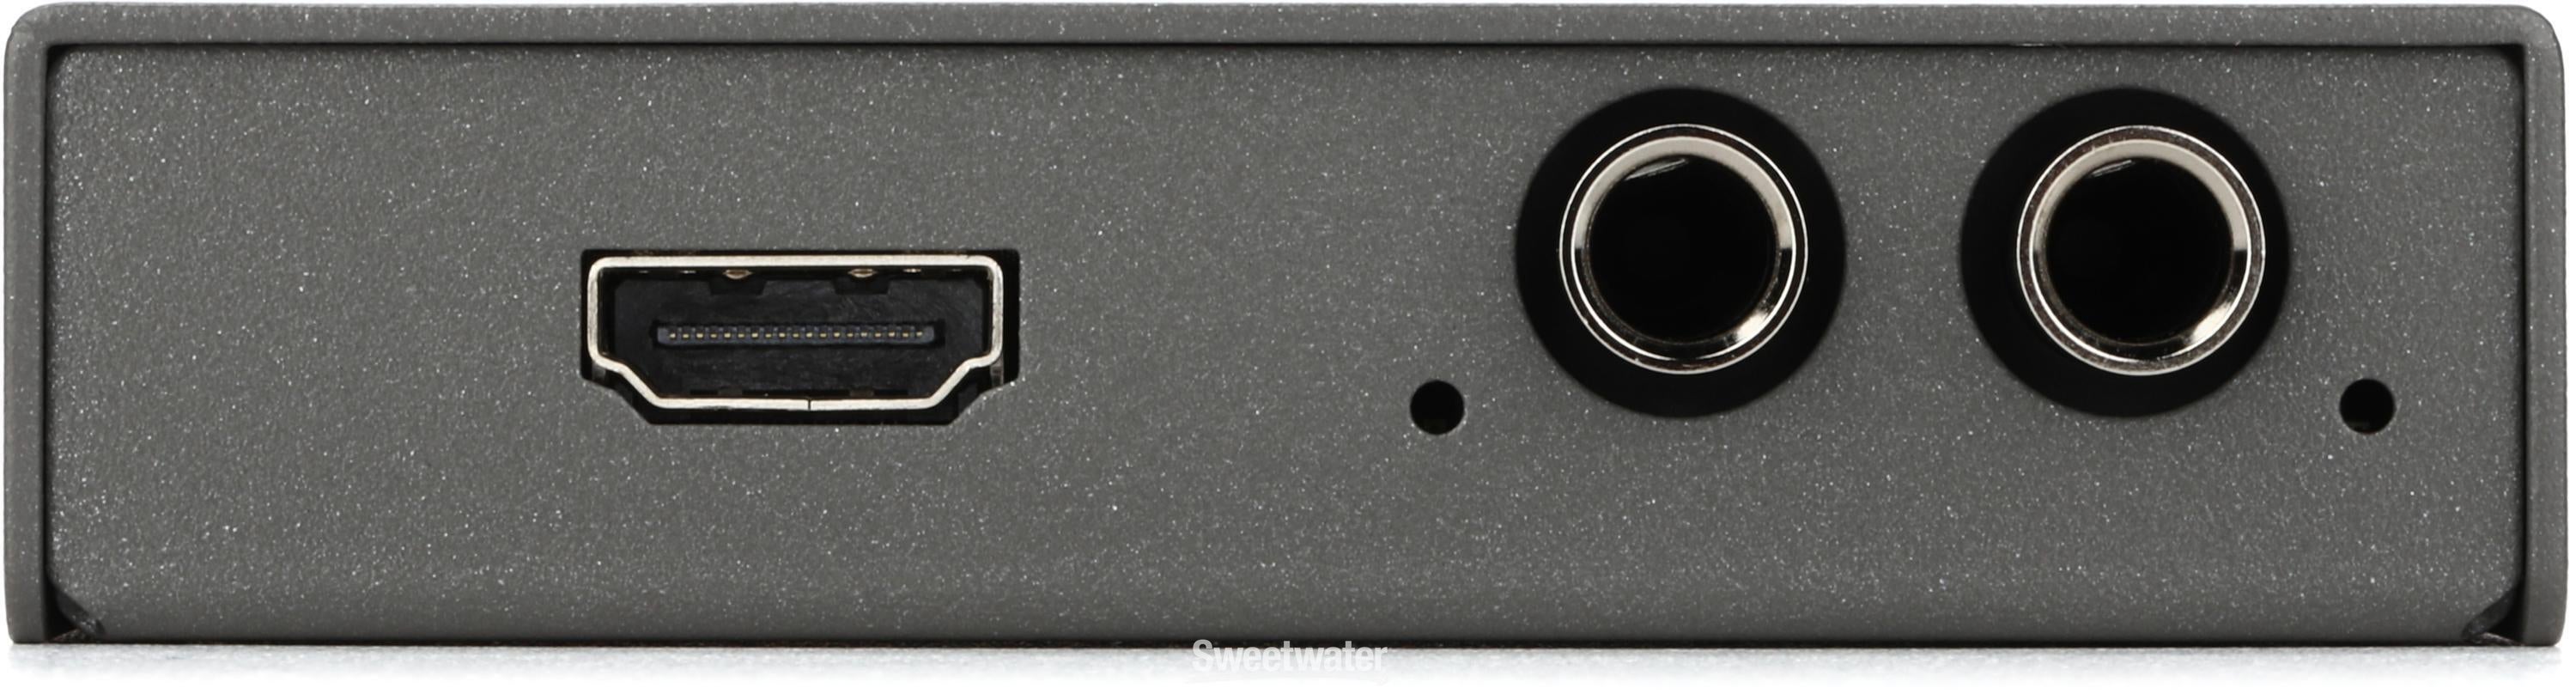 Blackmagic Design Mini Converter 6G-SDI To HDMI | Sweetwater